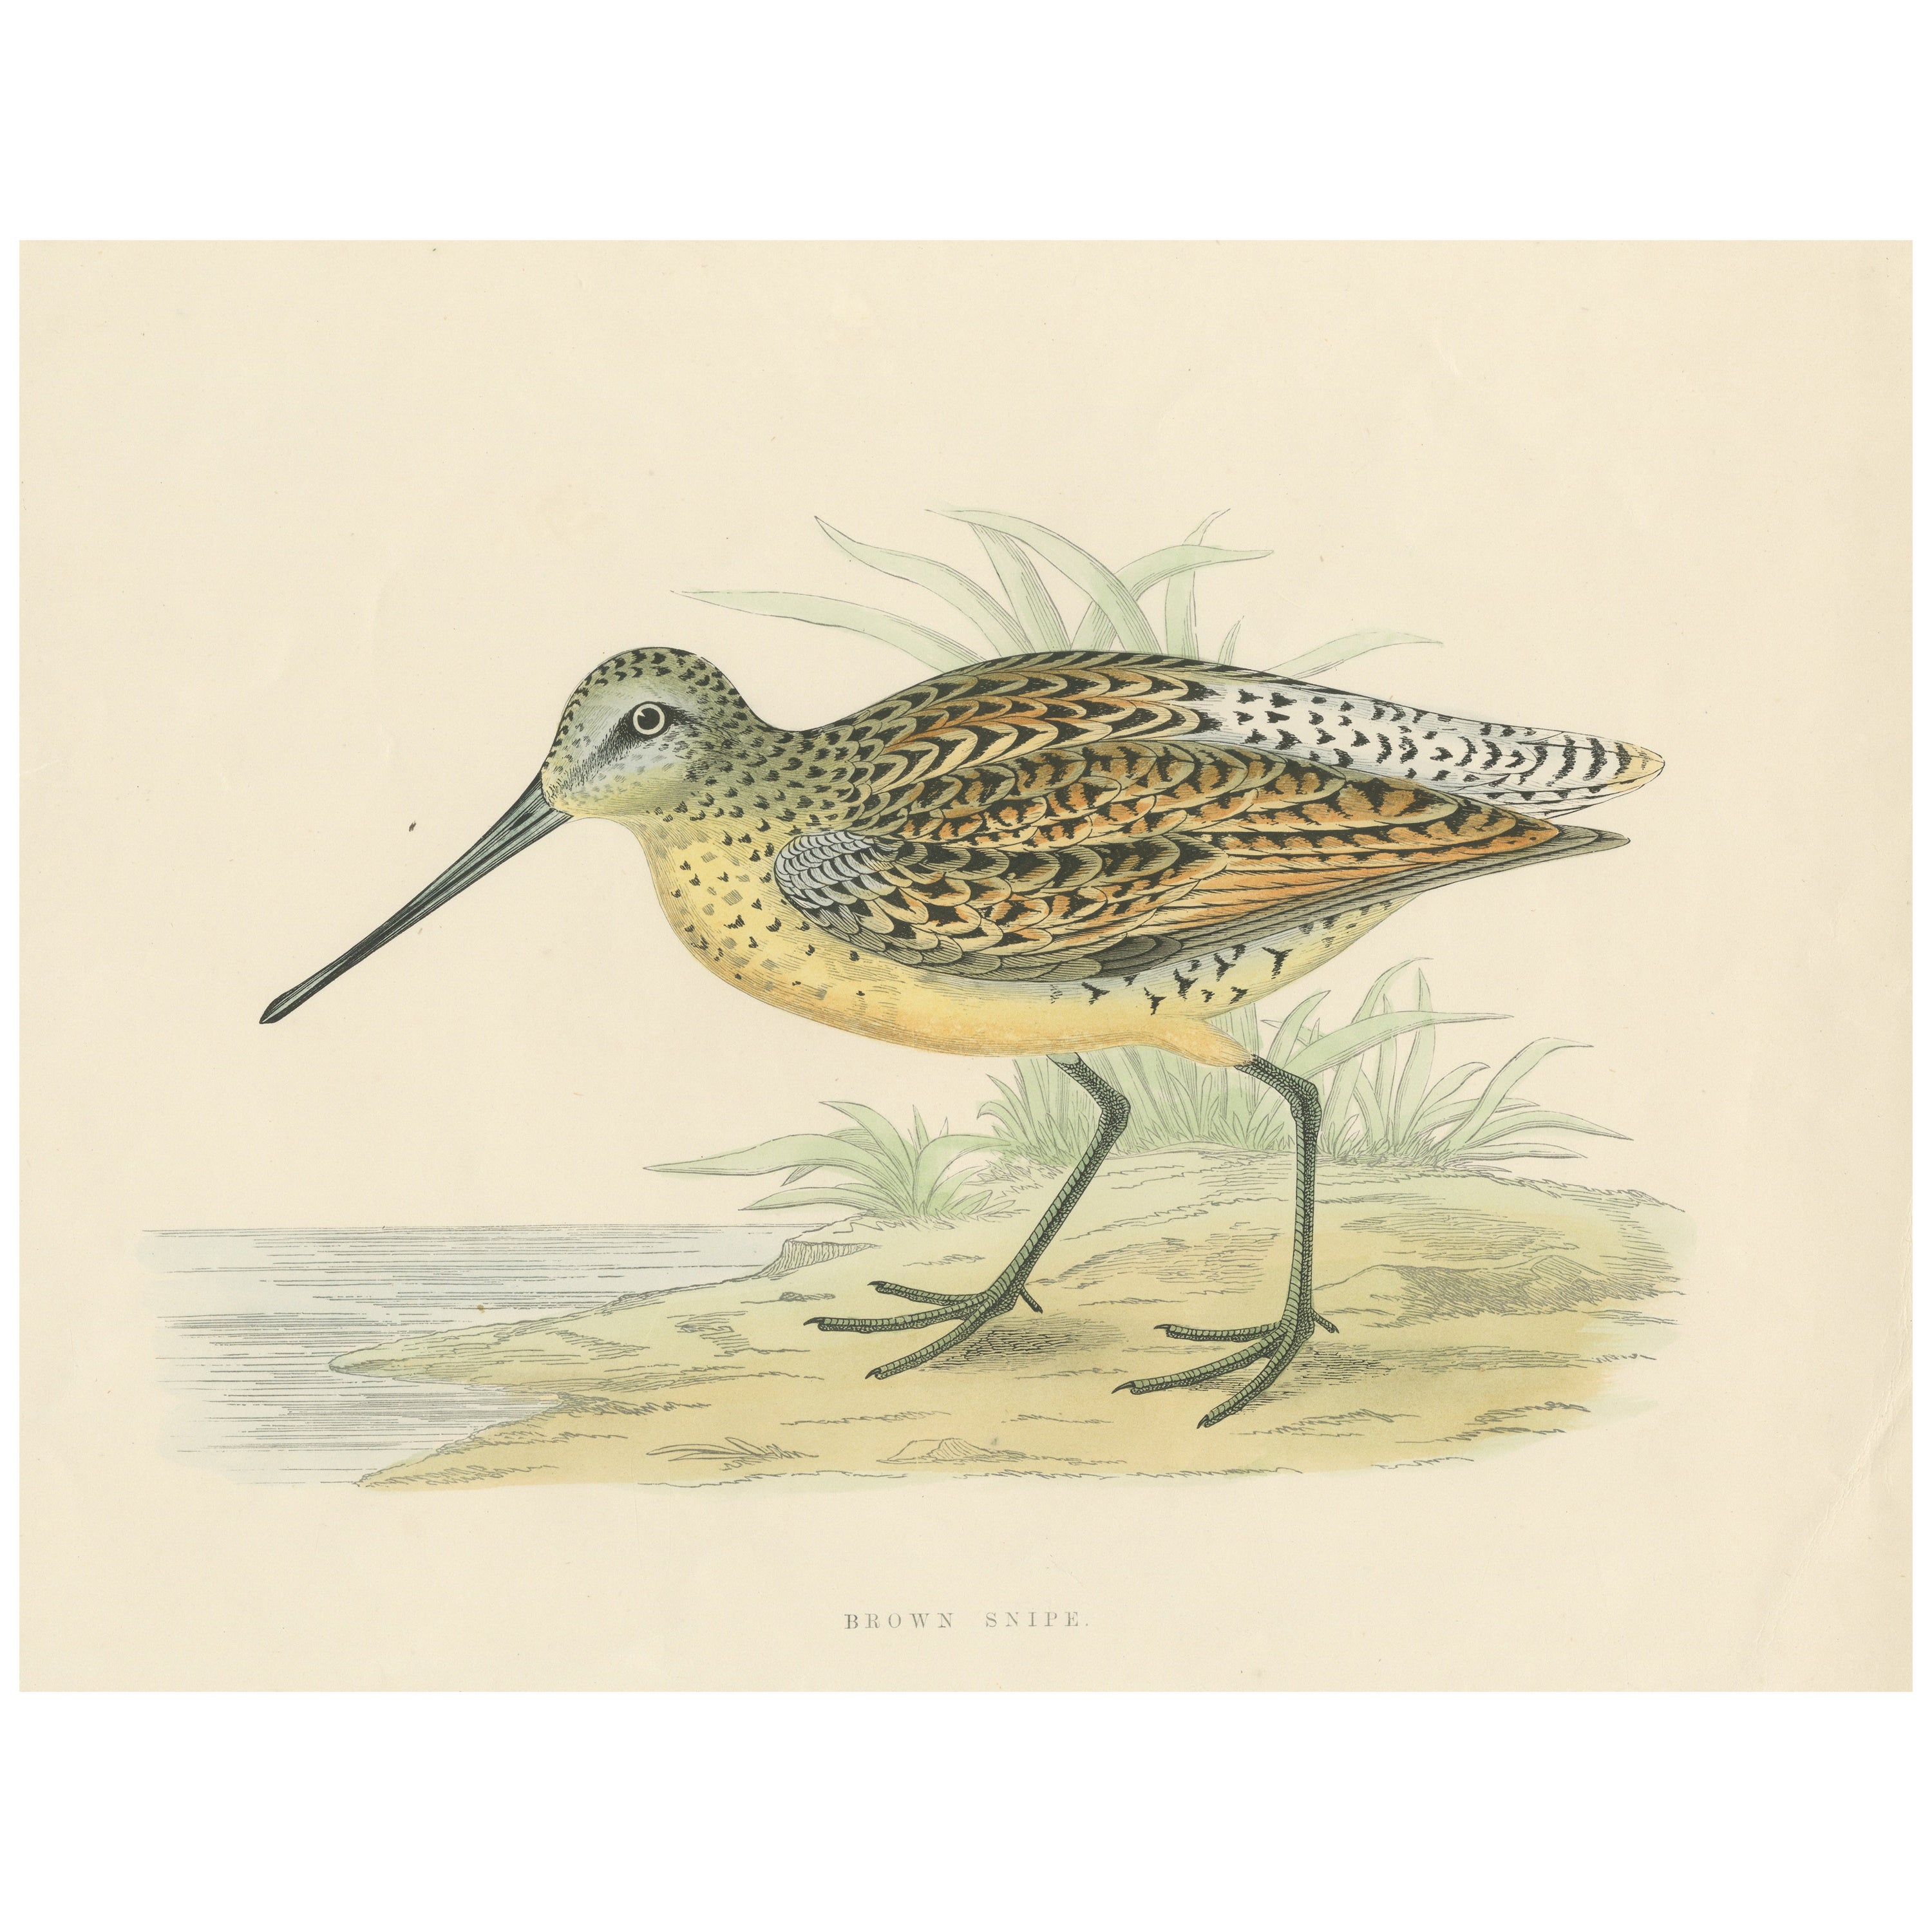 Original Antique Bird Print of a Brown Snipe